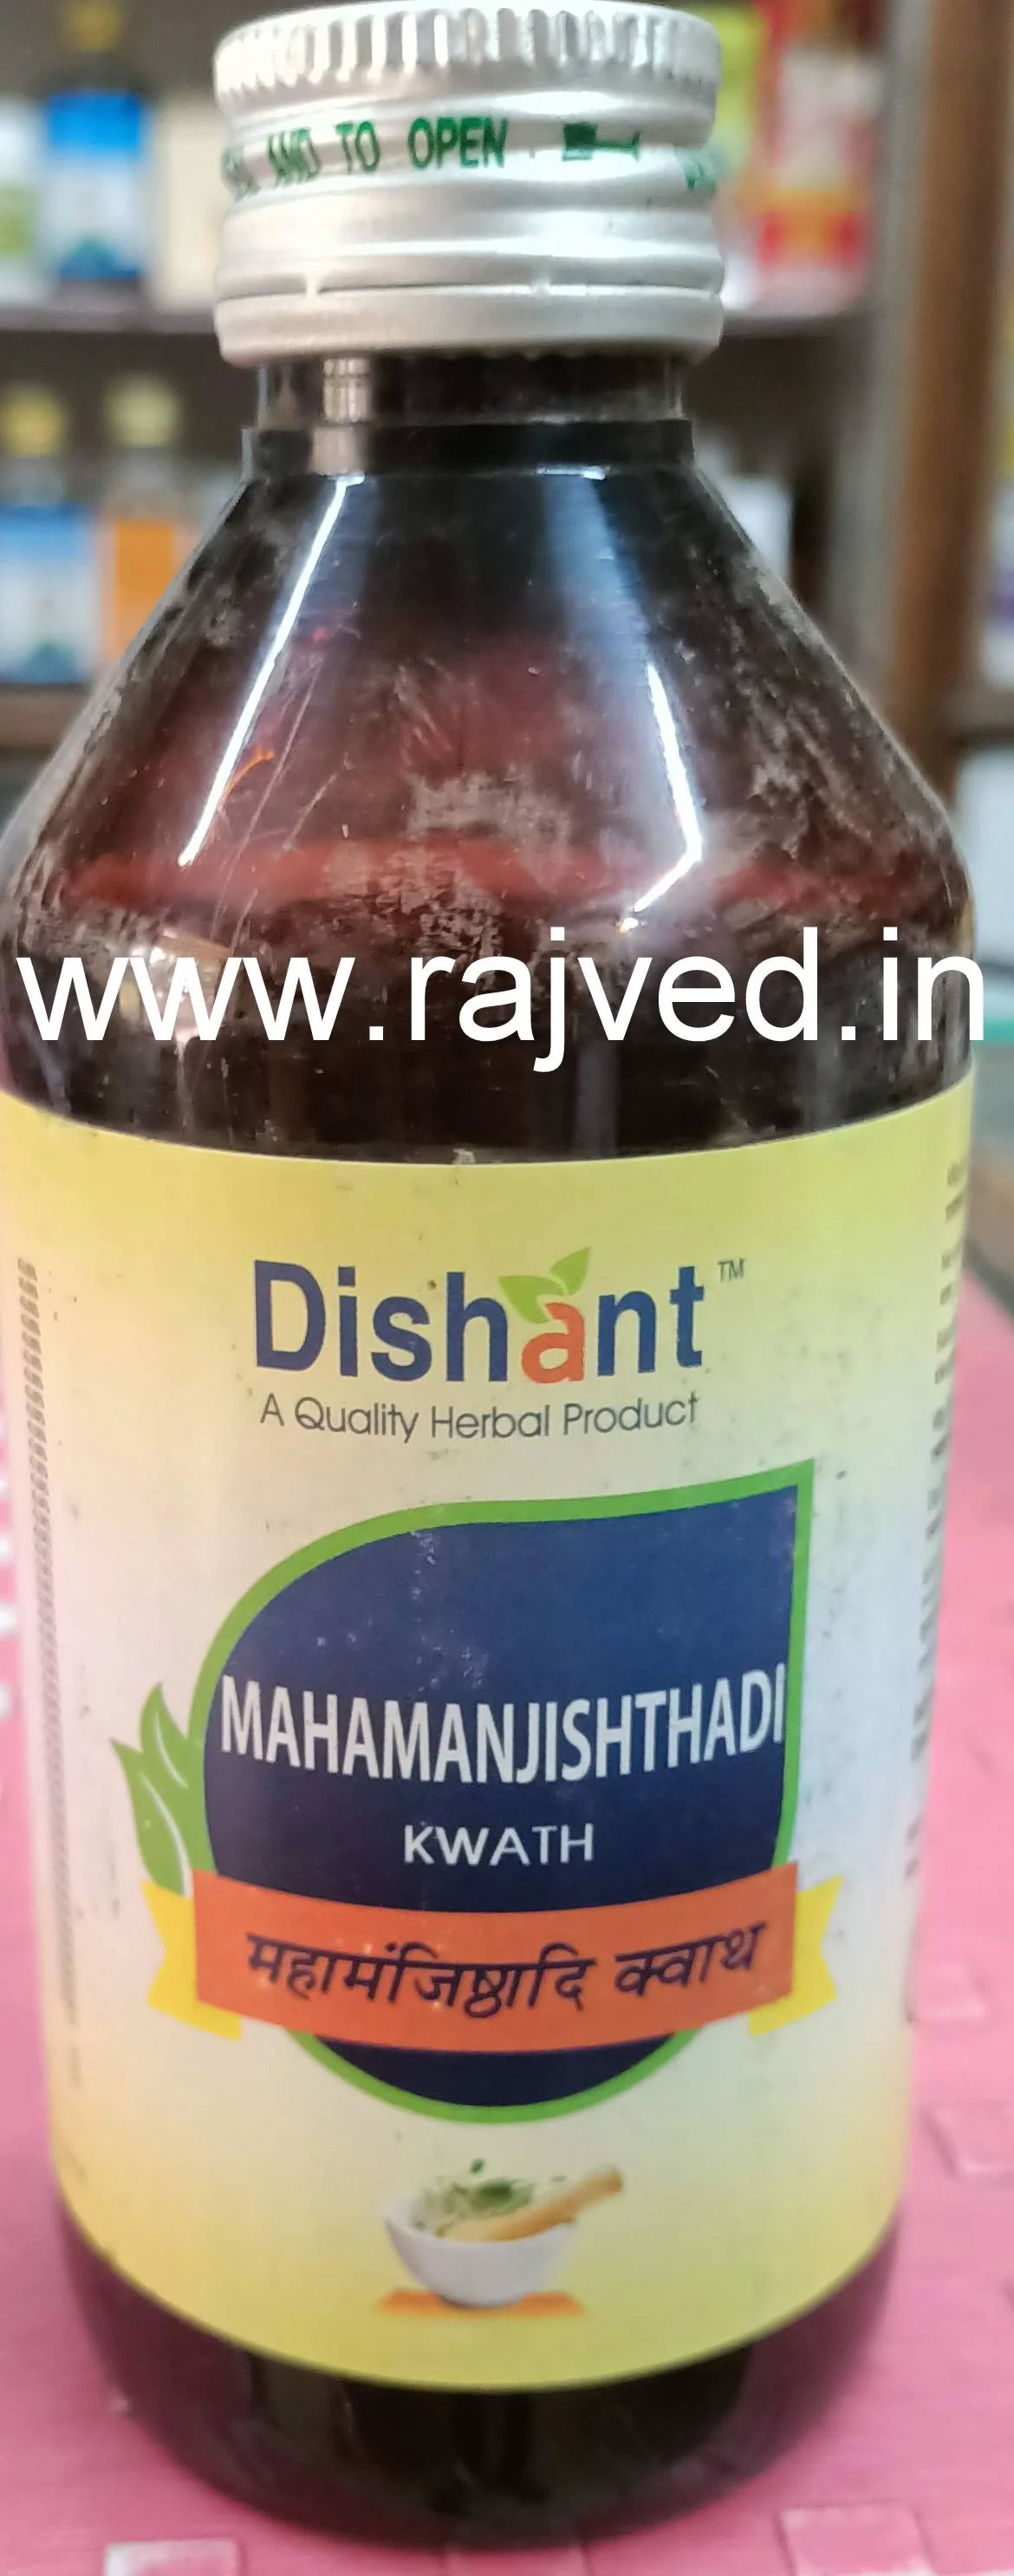 mahamanjishthadi kwath 400ml dishant ayurvedic suppliers